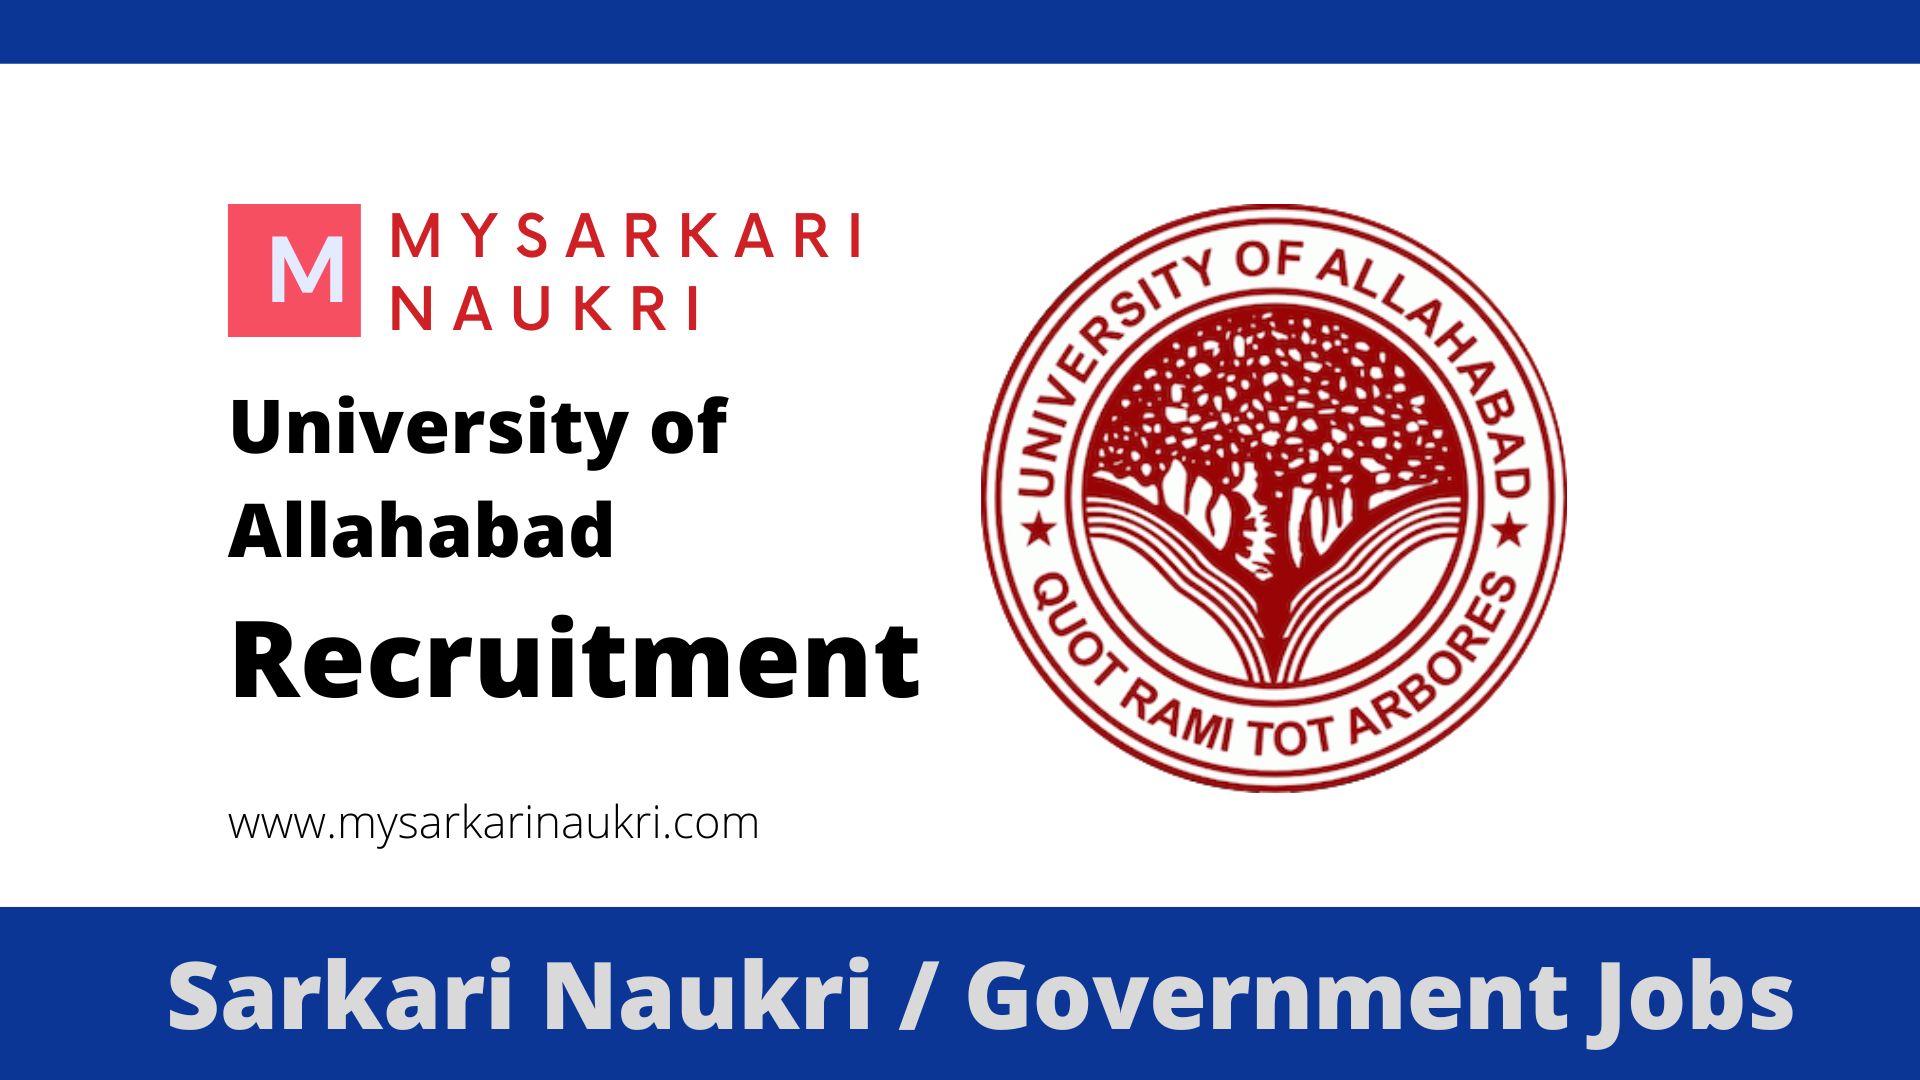 Allahabad-University-Logo | Indian University Logo or Offici… | Flickr